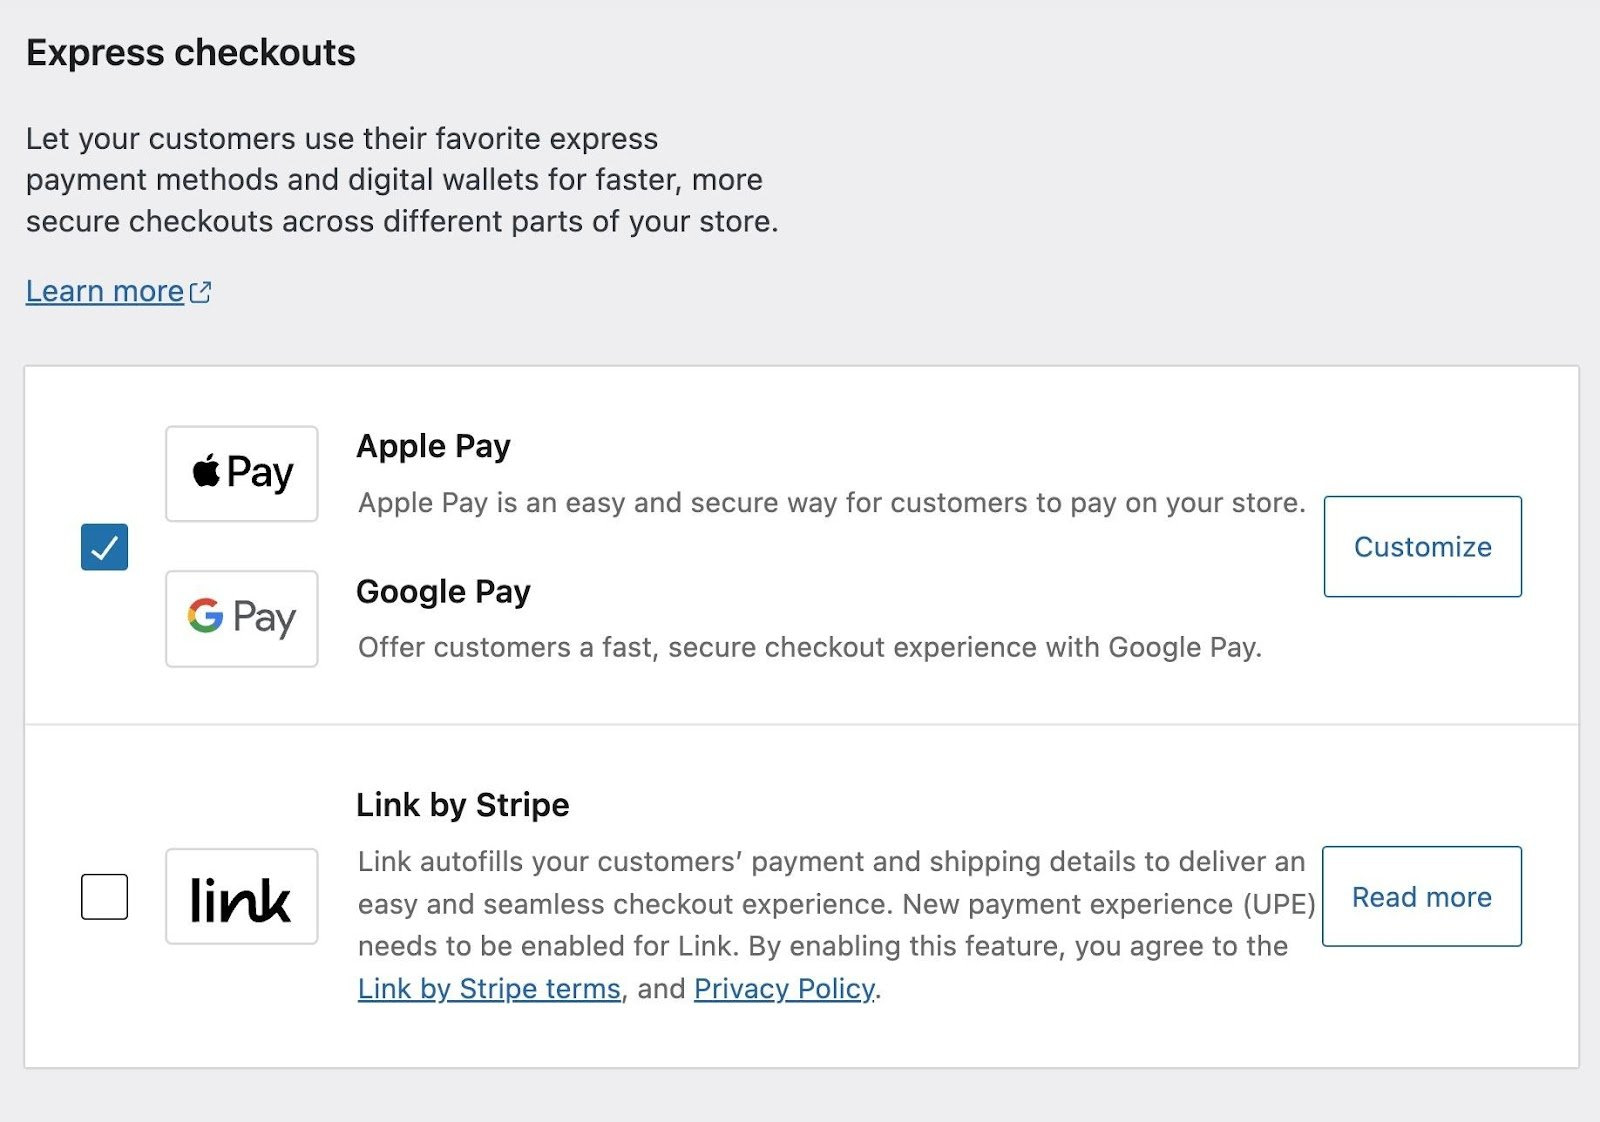 Adding express checkouts like Apple Pay.